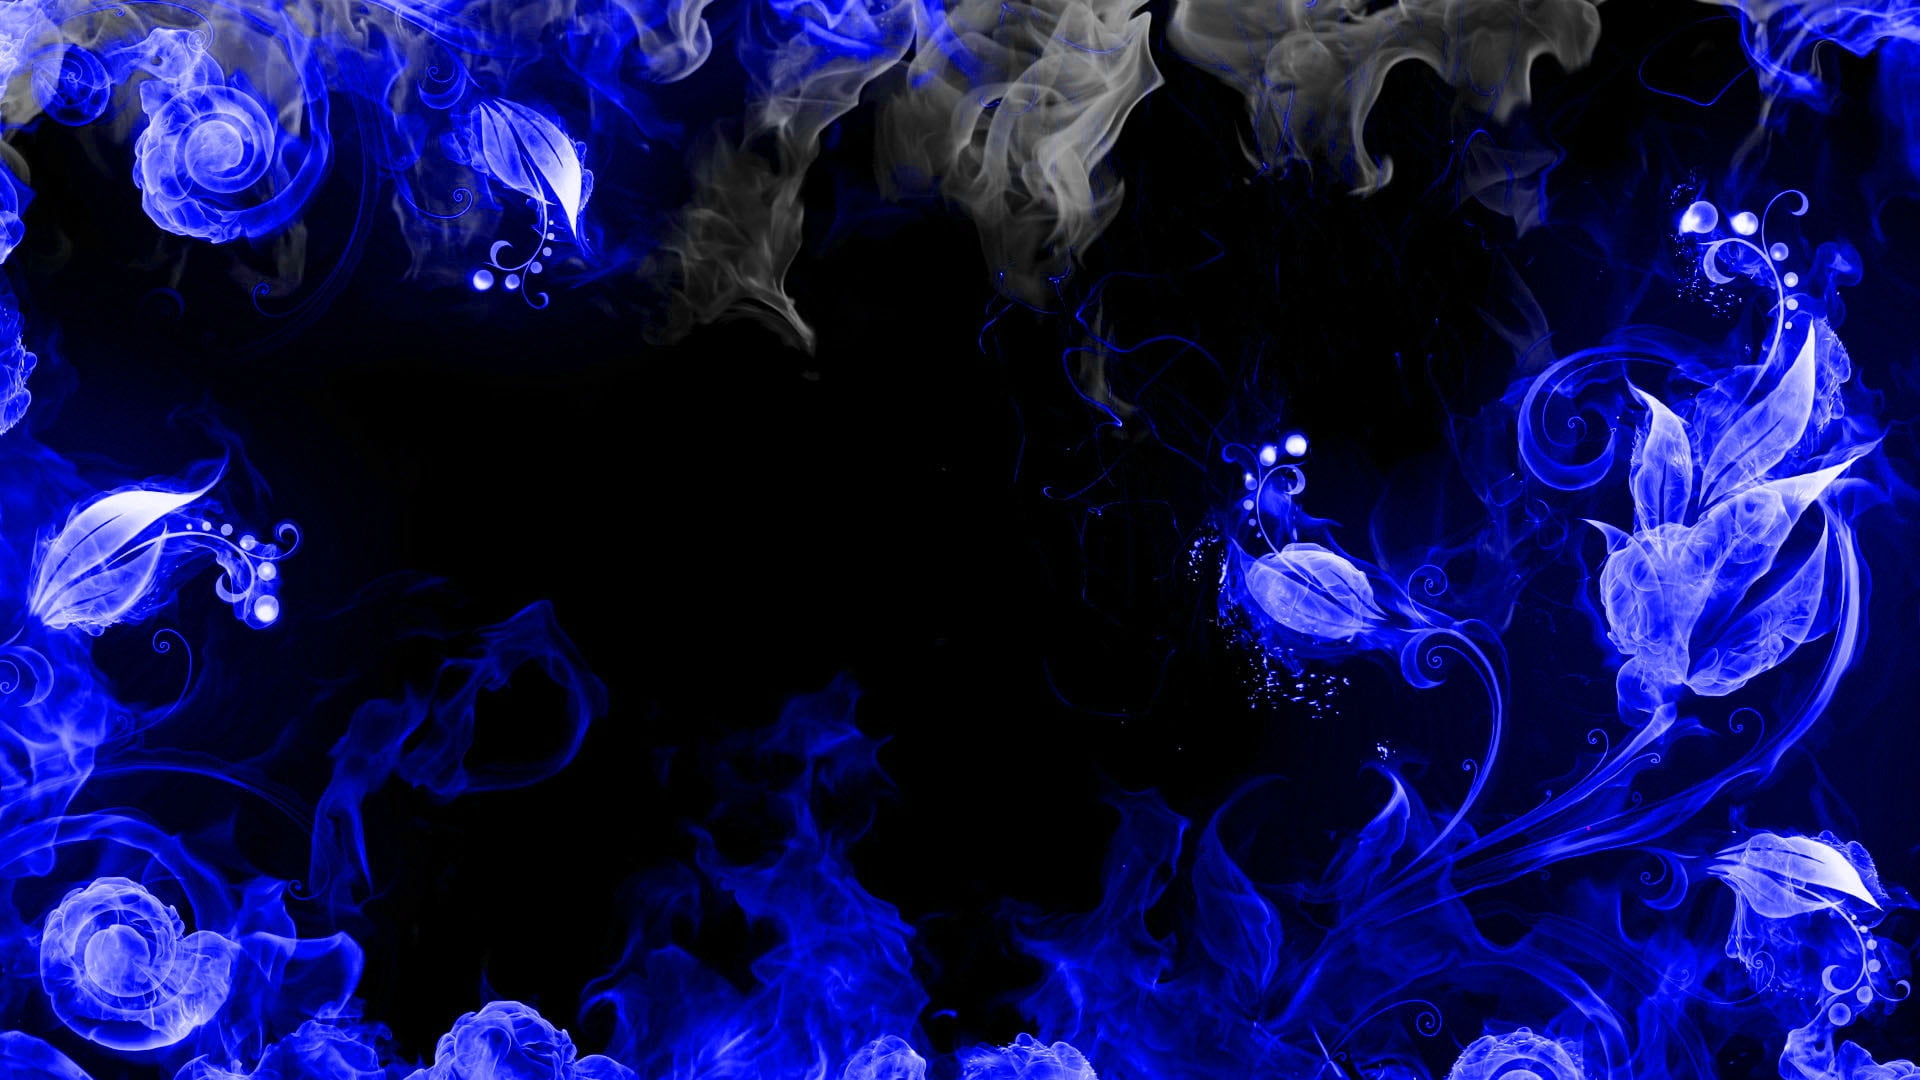 183216 Blue Flame Black Background Images Stock Photos  Vectors   Shutterstock